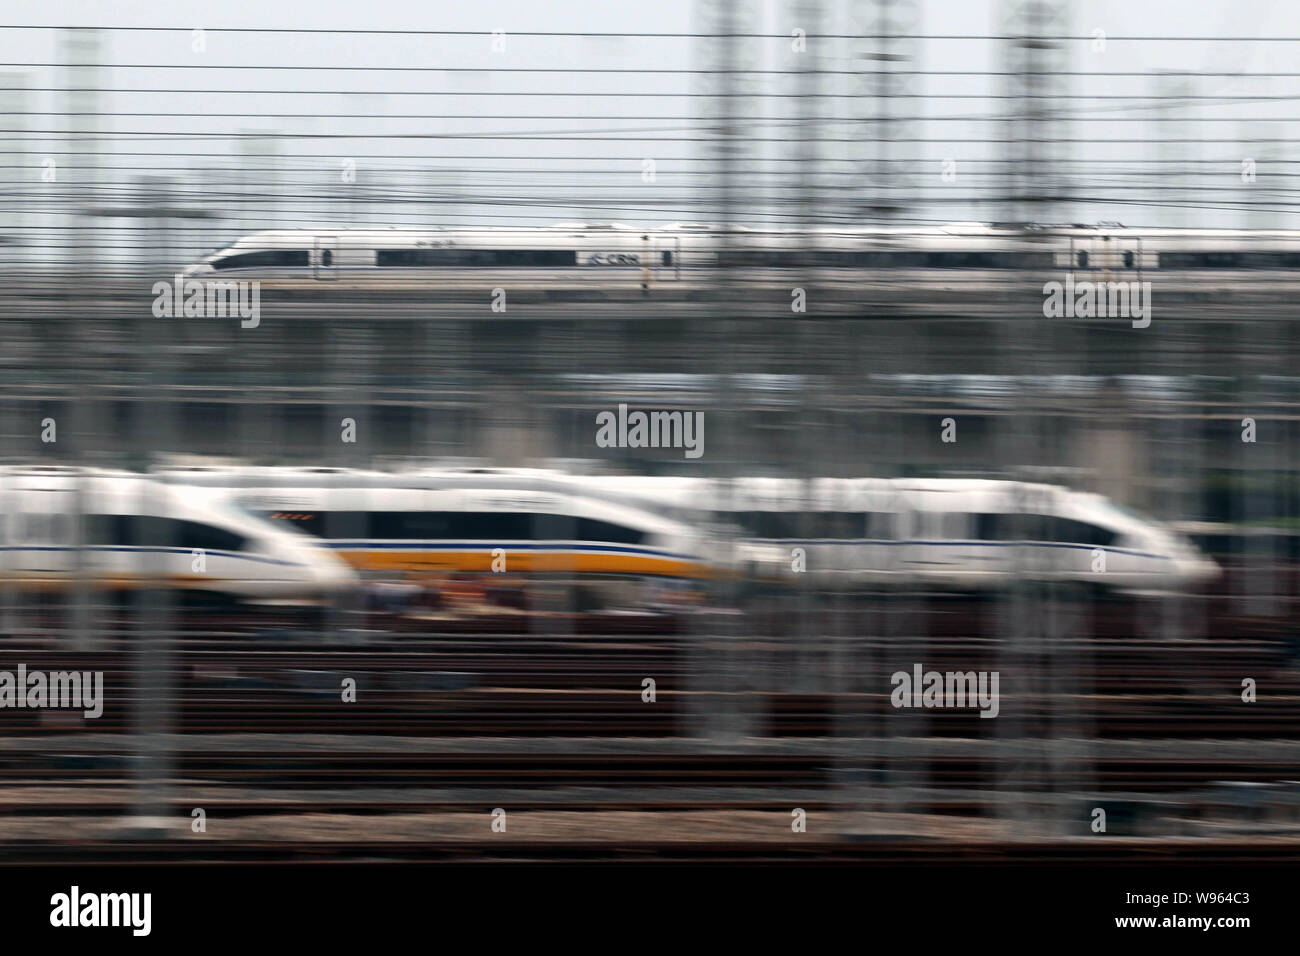 ---- Eine CRH (China Railway High speed) Bullet Train, top, Pässe durch andere Züge am Bahnhof Shanghai Hongqiao in Shanghai, China, 28 Jun Stockfoto